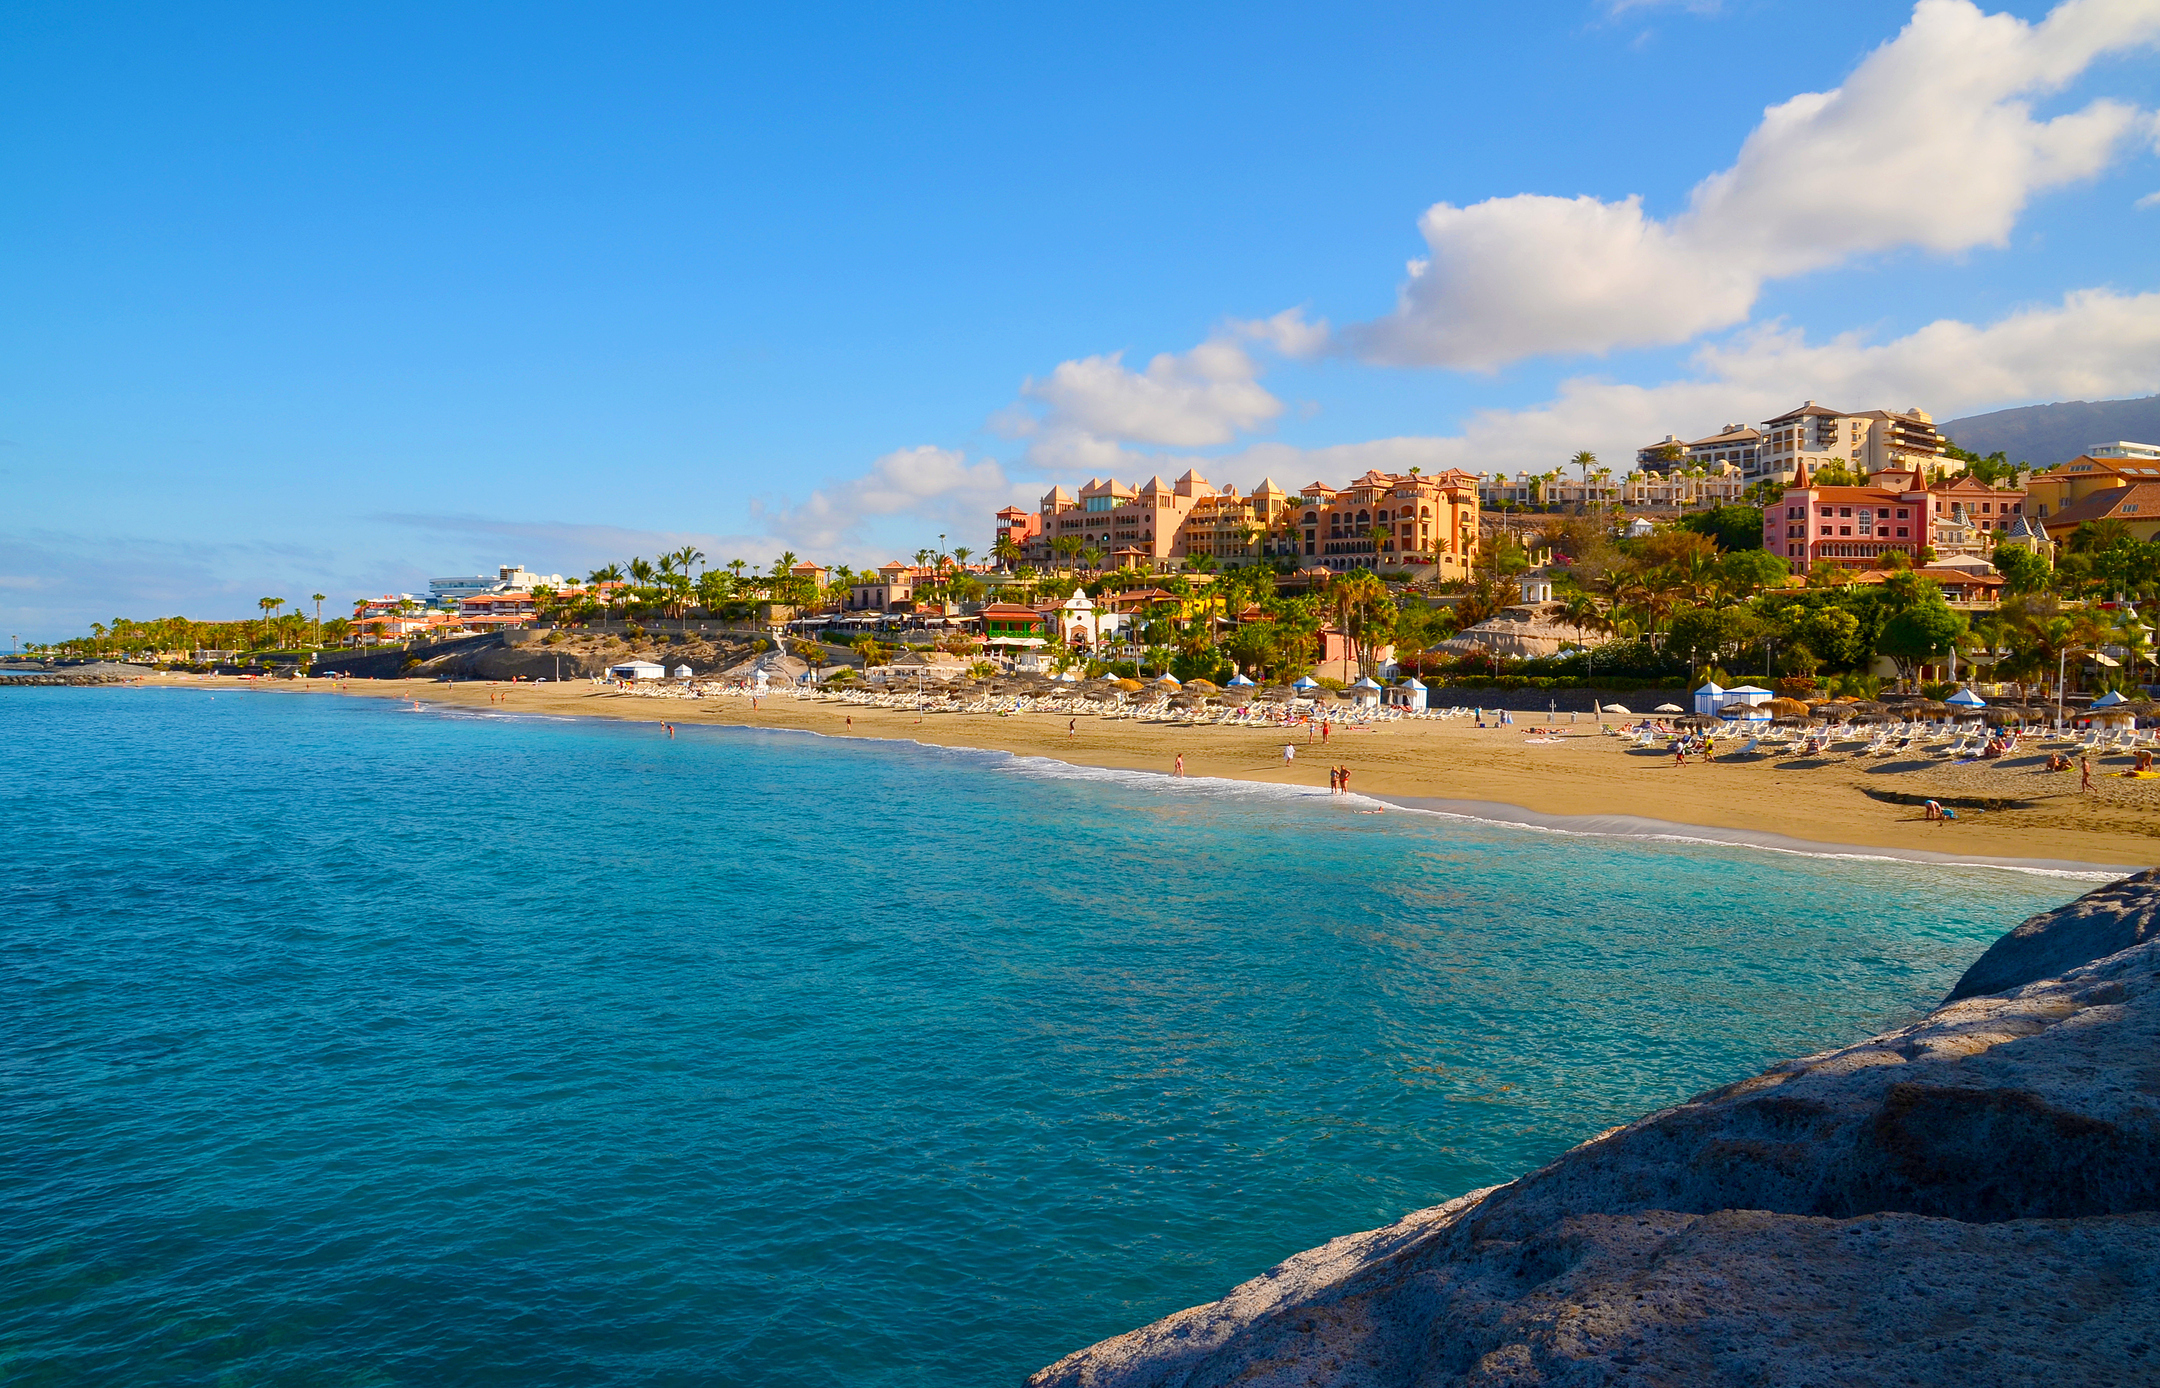 El Duque beach in Costa Adeje, Tenerife (Getty Images)